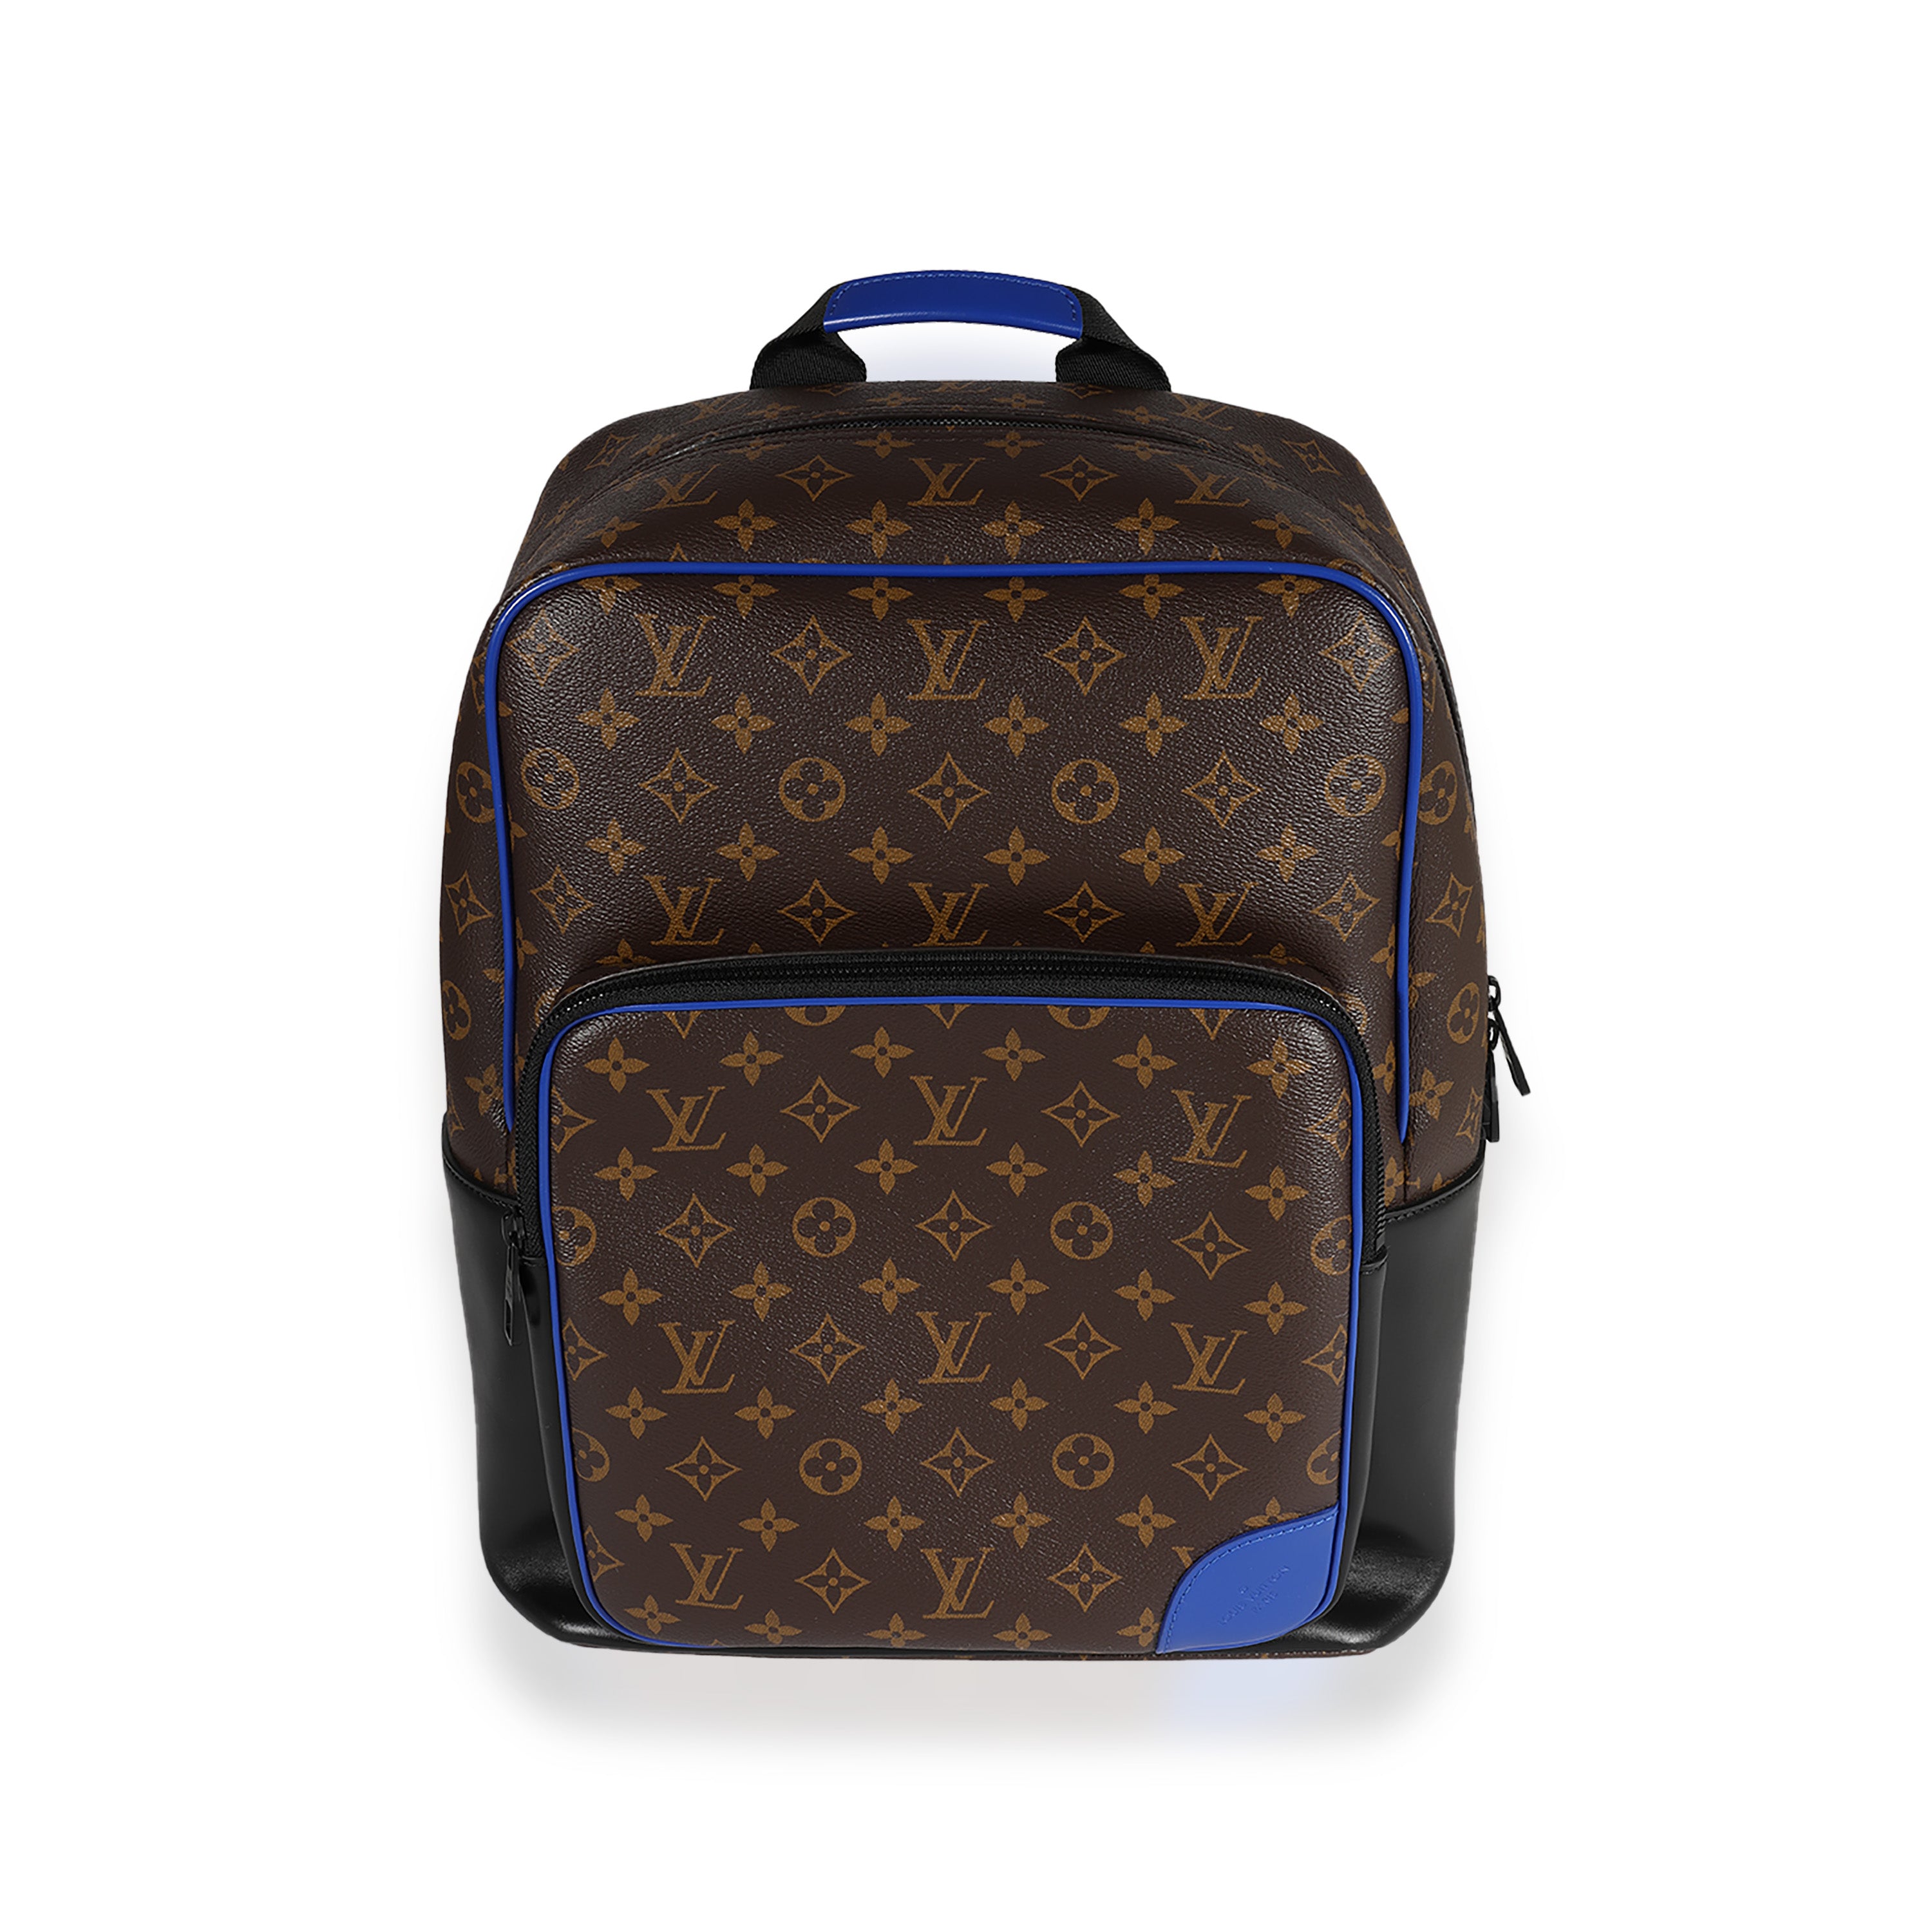 Dean backpack cost cutting : r/Louisvuitton